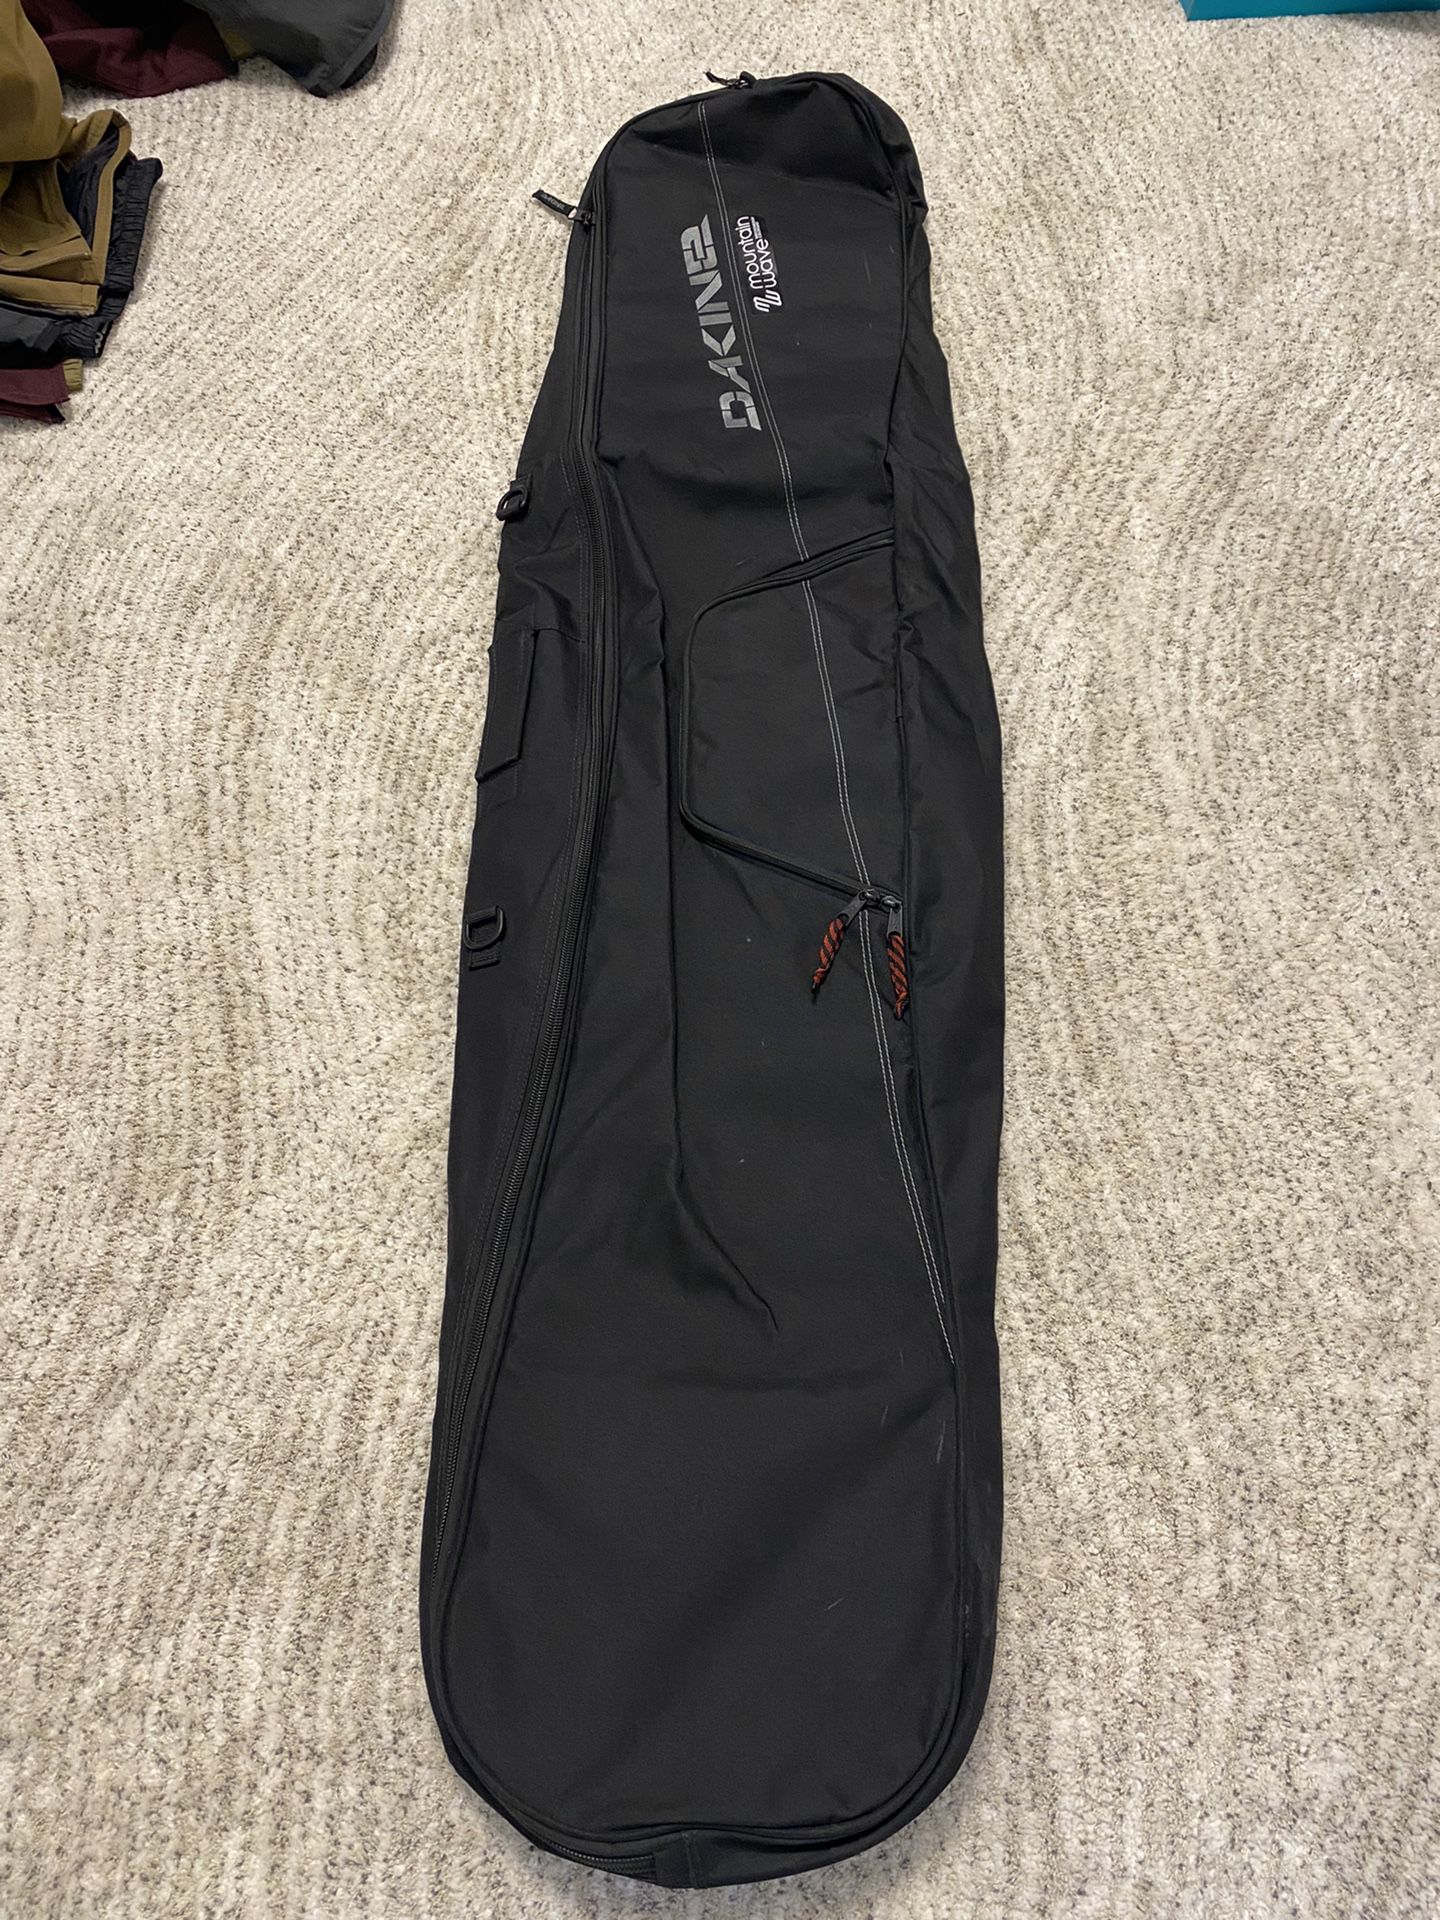 Snowboard Sleeve Bag